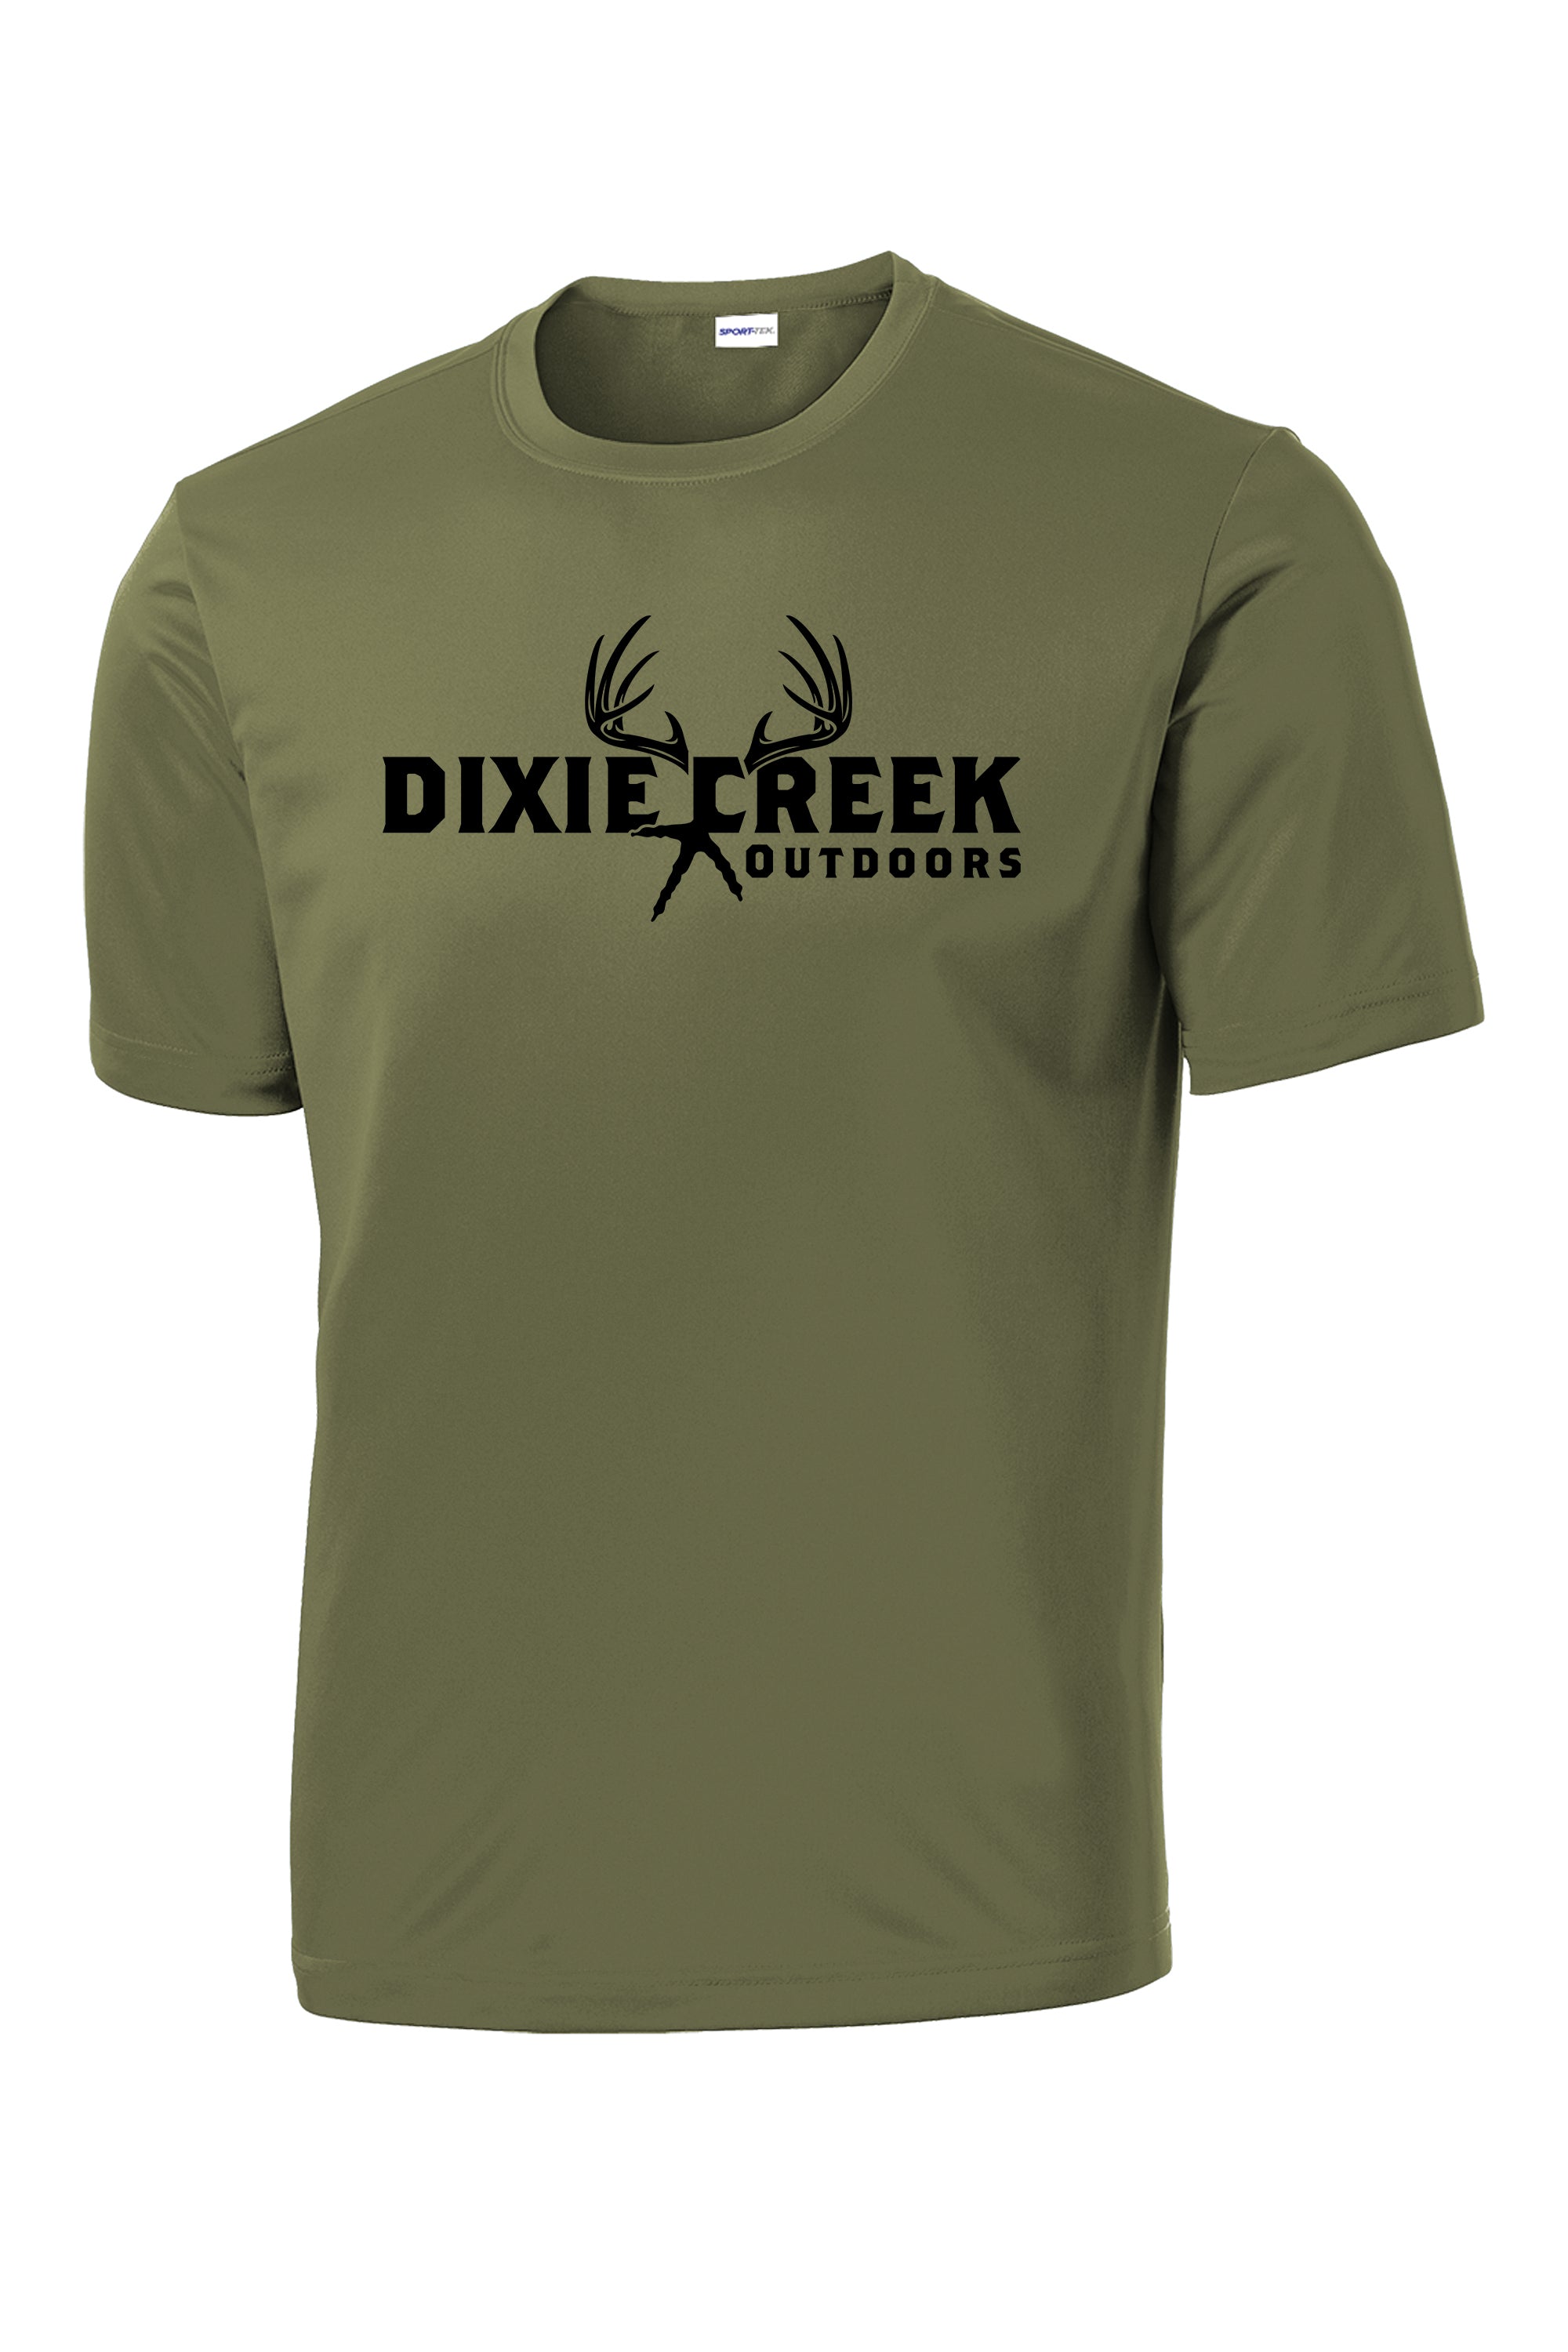 Dixie Creek Buck - Short Sleeve Dri-Fit